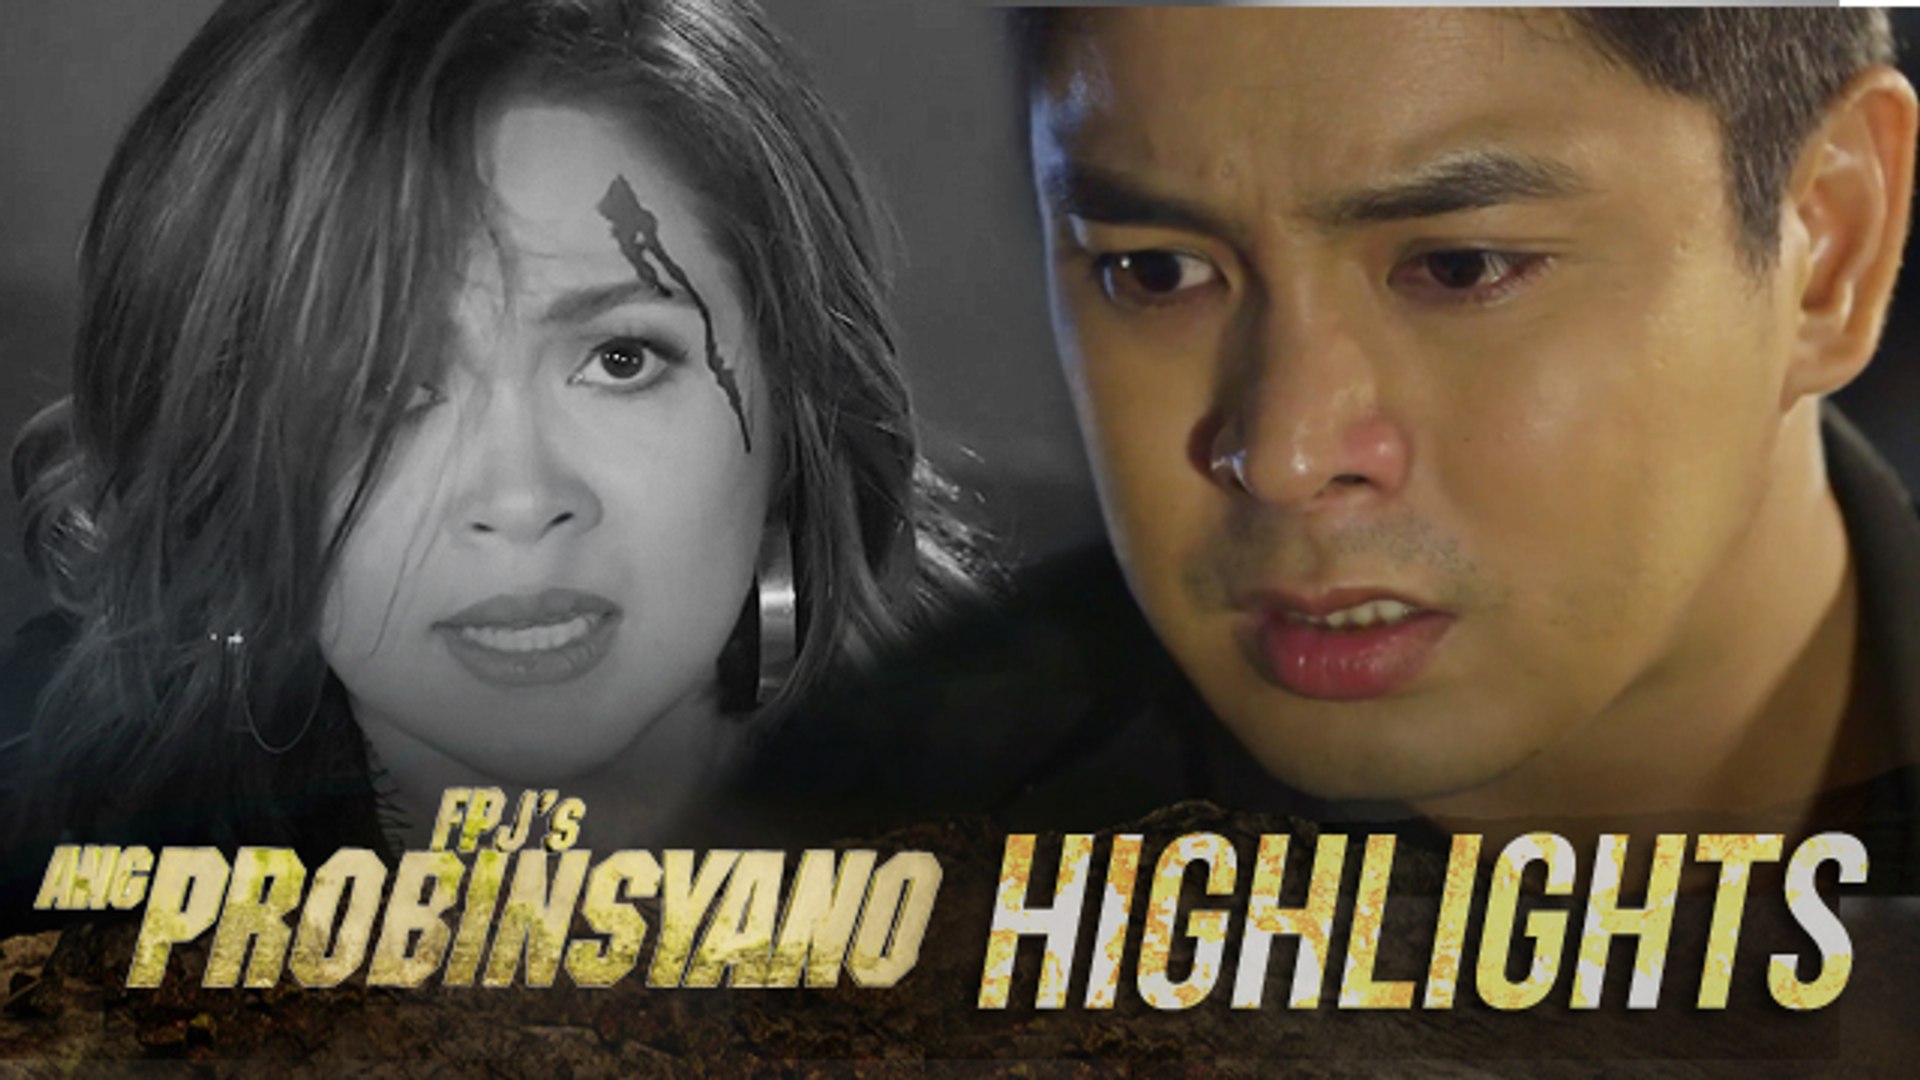 Cardo helps Jane from danger | FPJ's Ang Probinsyano